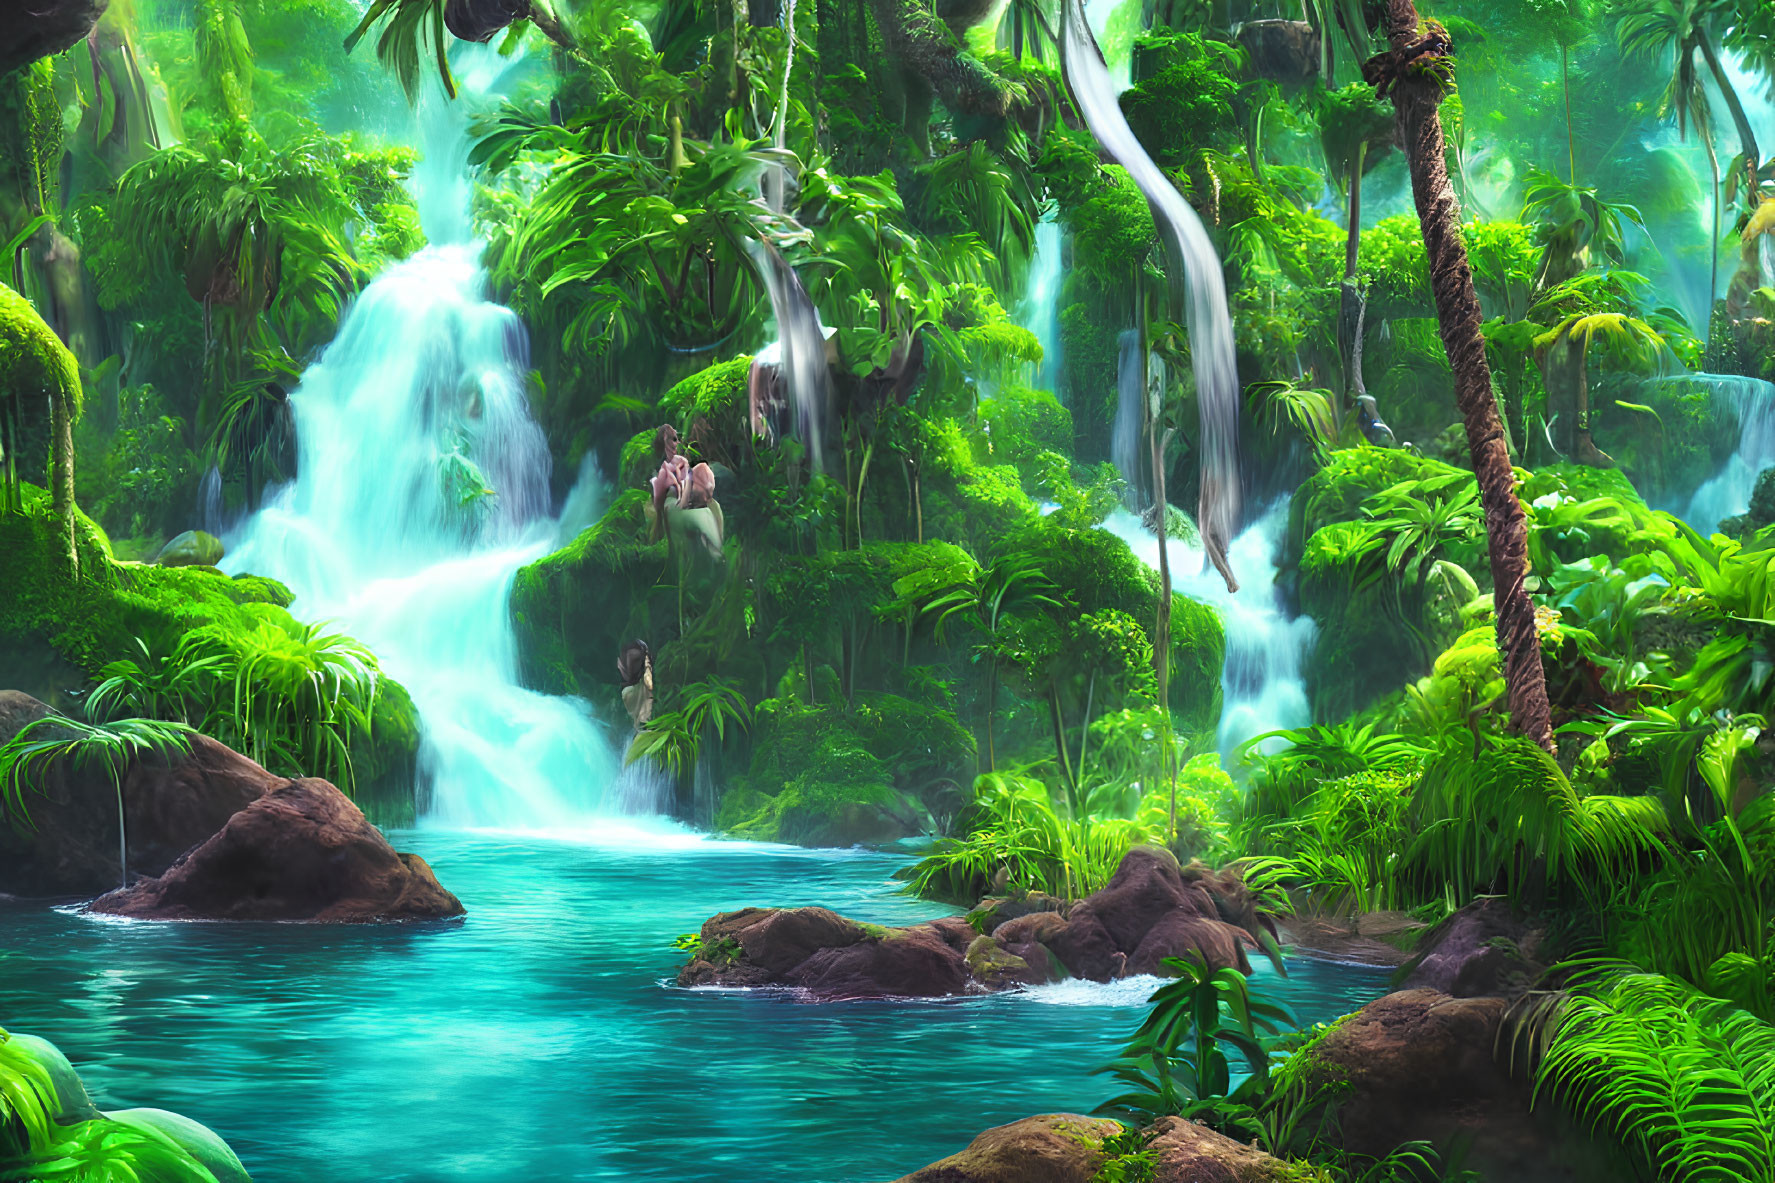 Lush Jungle Scene with Cascading Waterfalls